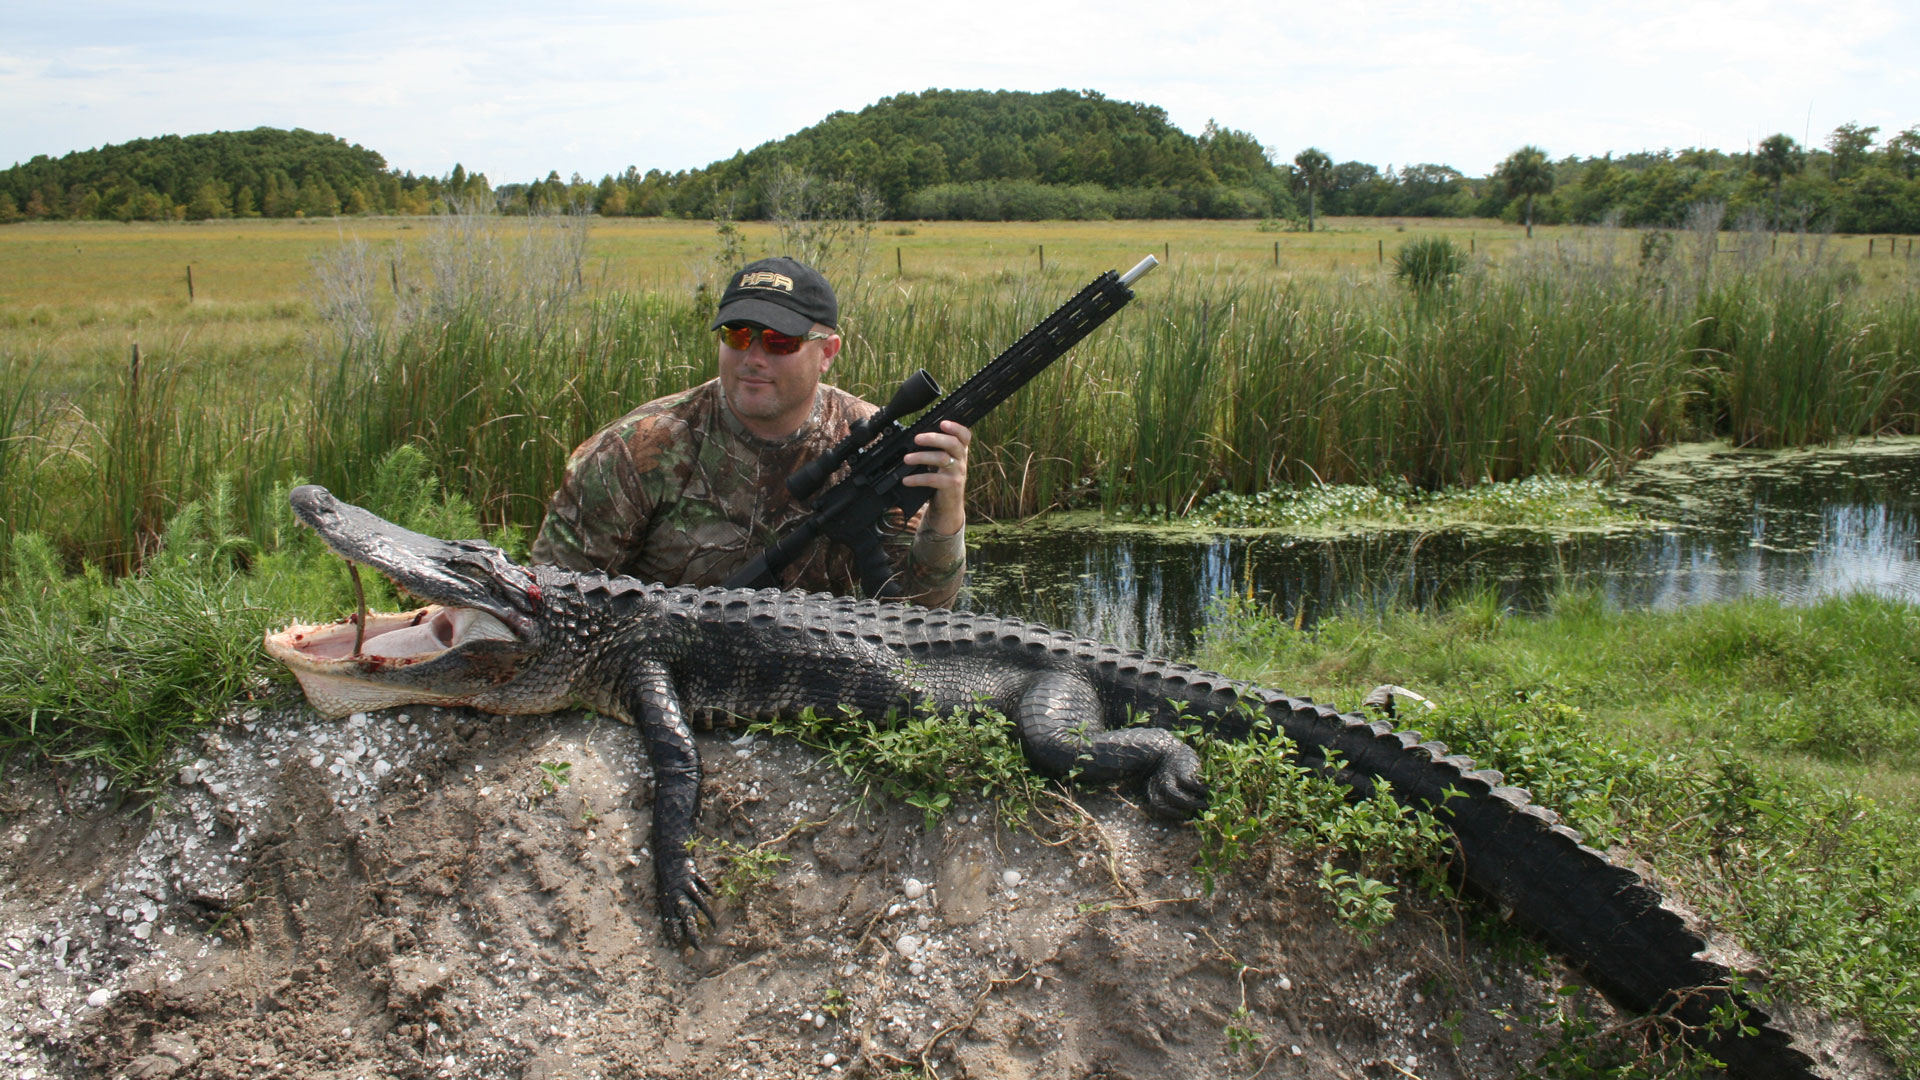 Hunter posing with gator in swamp